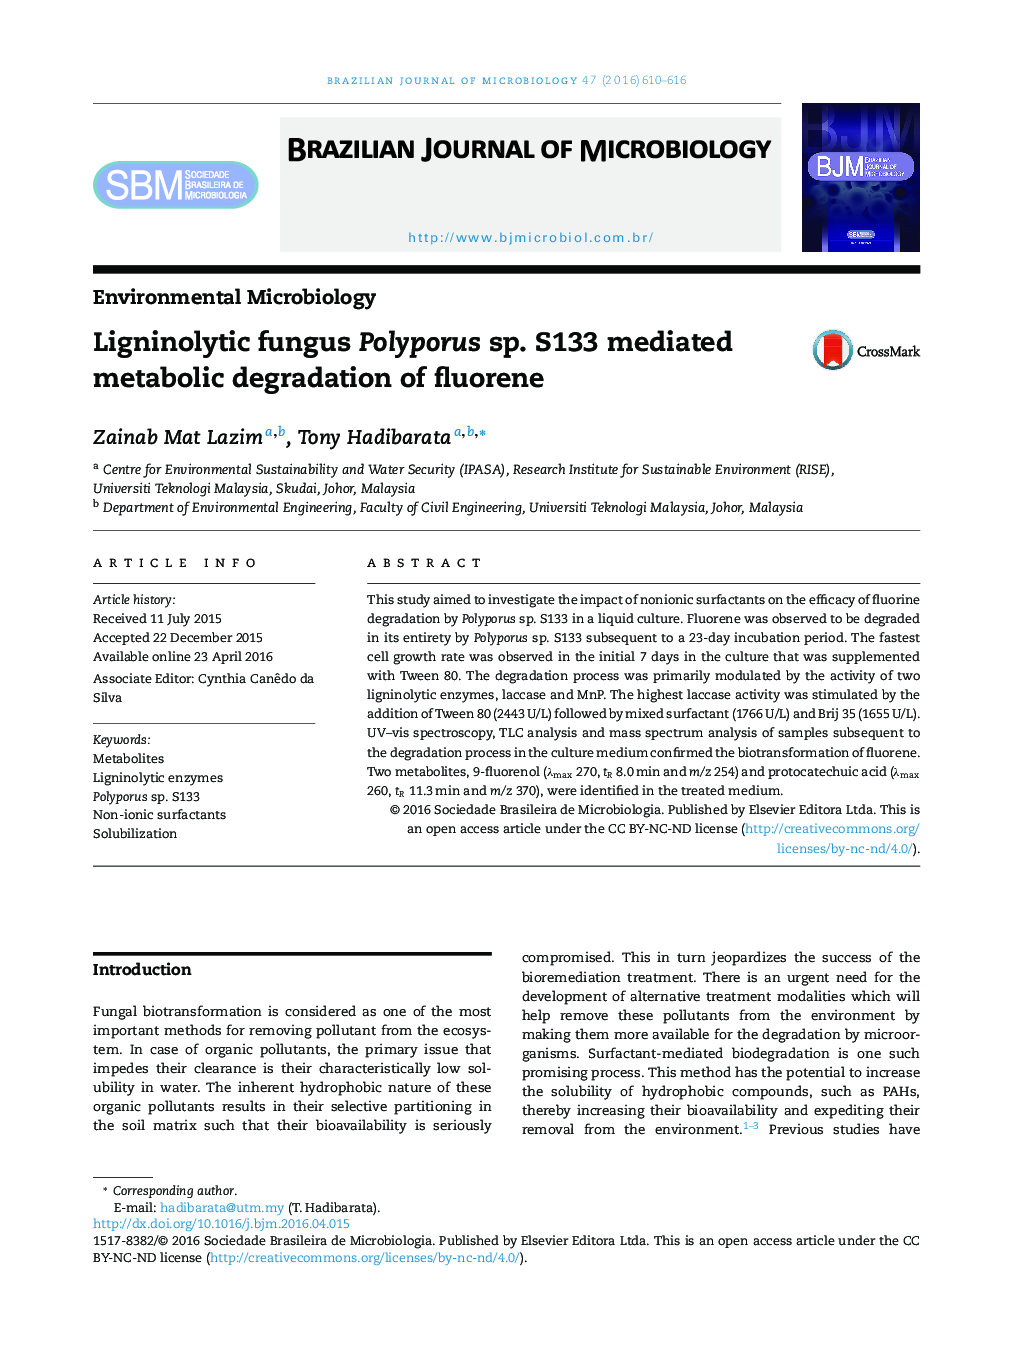 Ligninolytic fungus Polyporus sp. S133 mediated metabolic degradation of fluorene